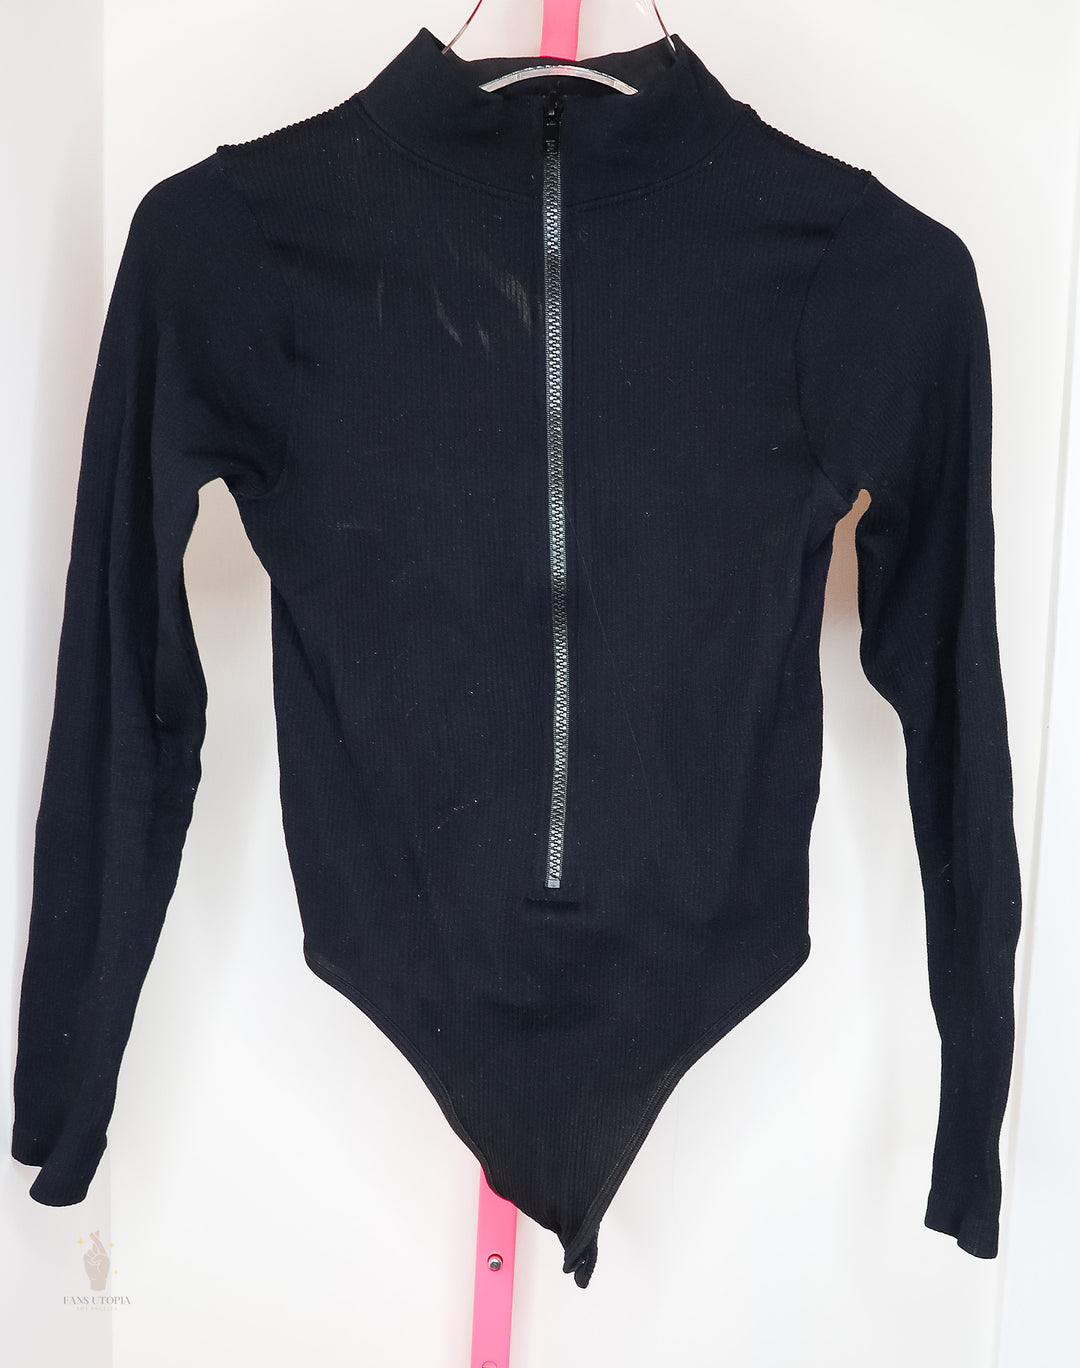 Kayley Gunner Black Ribbed Long Sleeve Zip Bodysuit